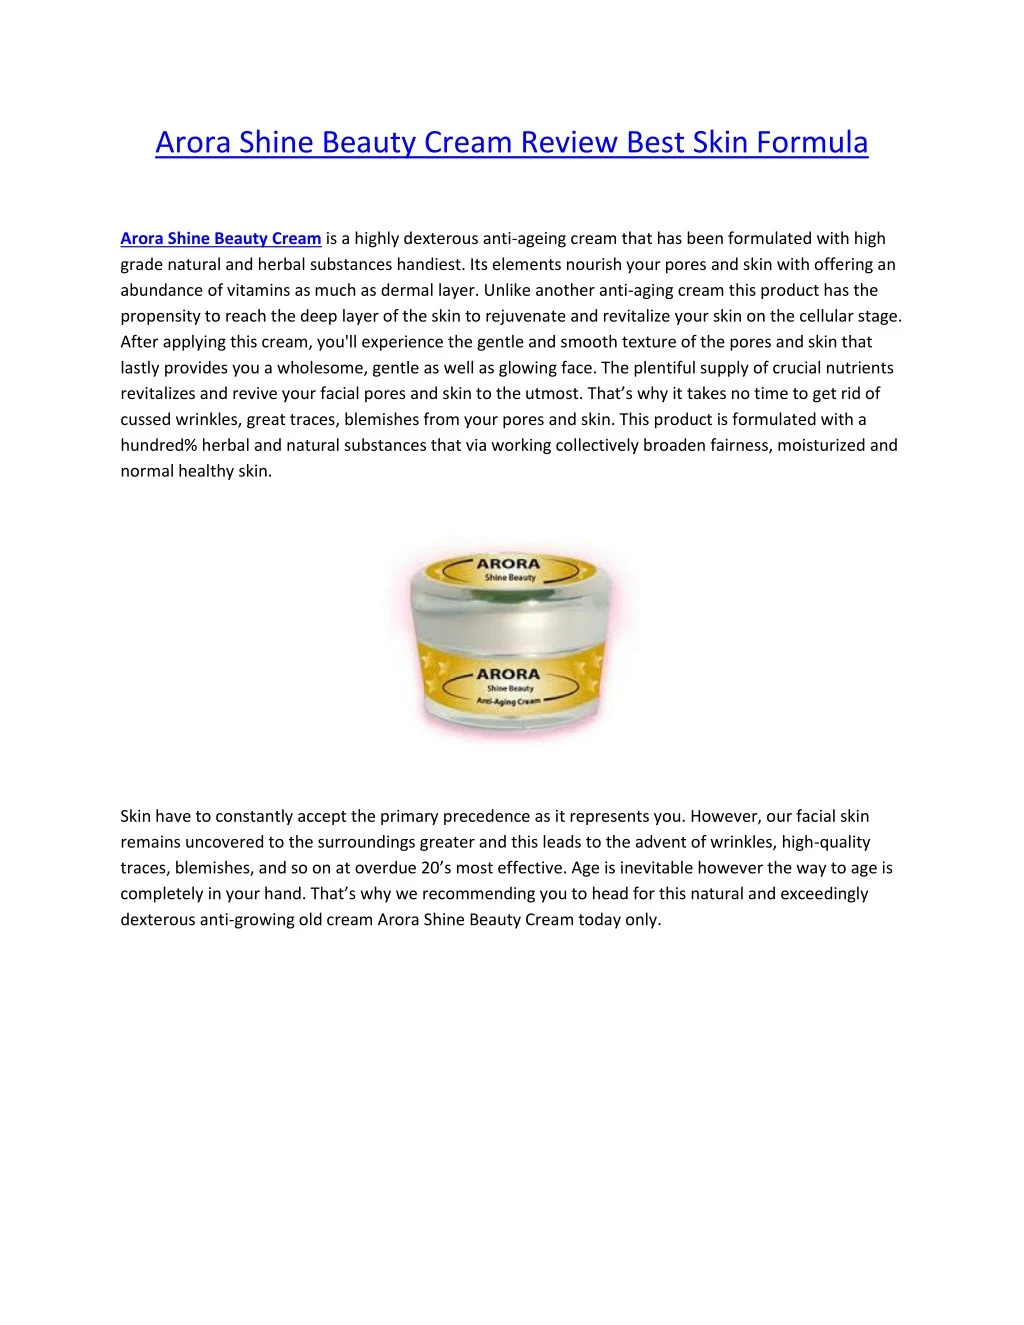 arora shine beauty cream review best skin formula